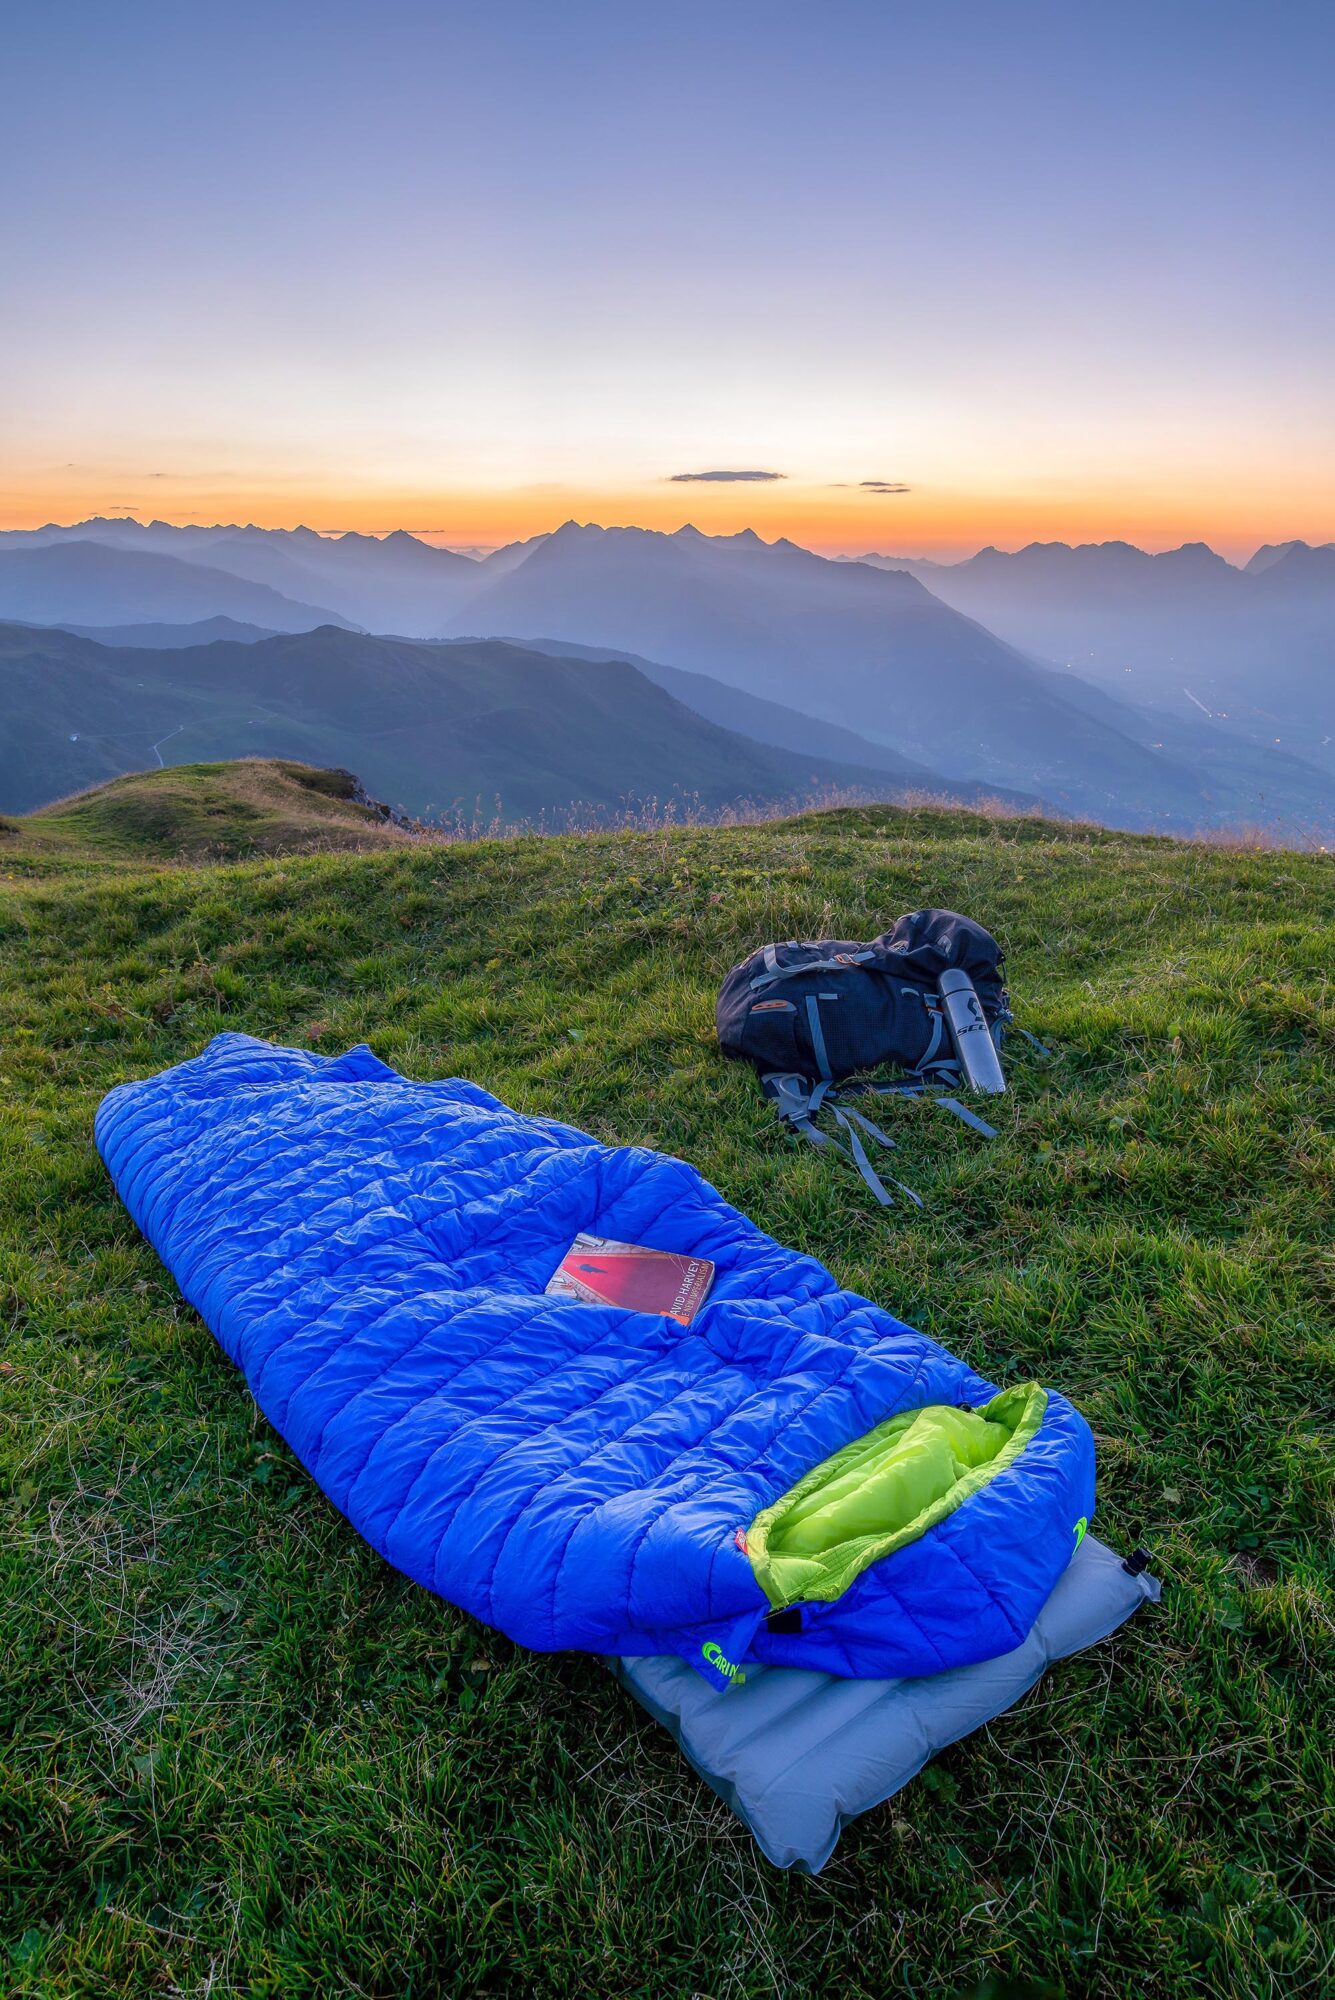 sleeping bag on a mountain